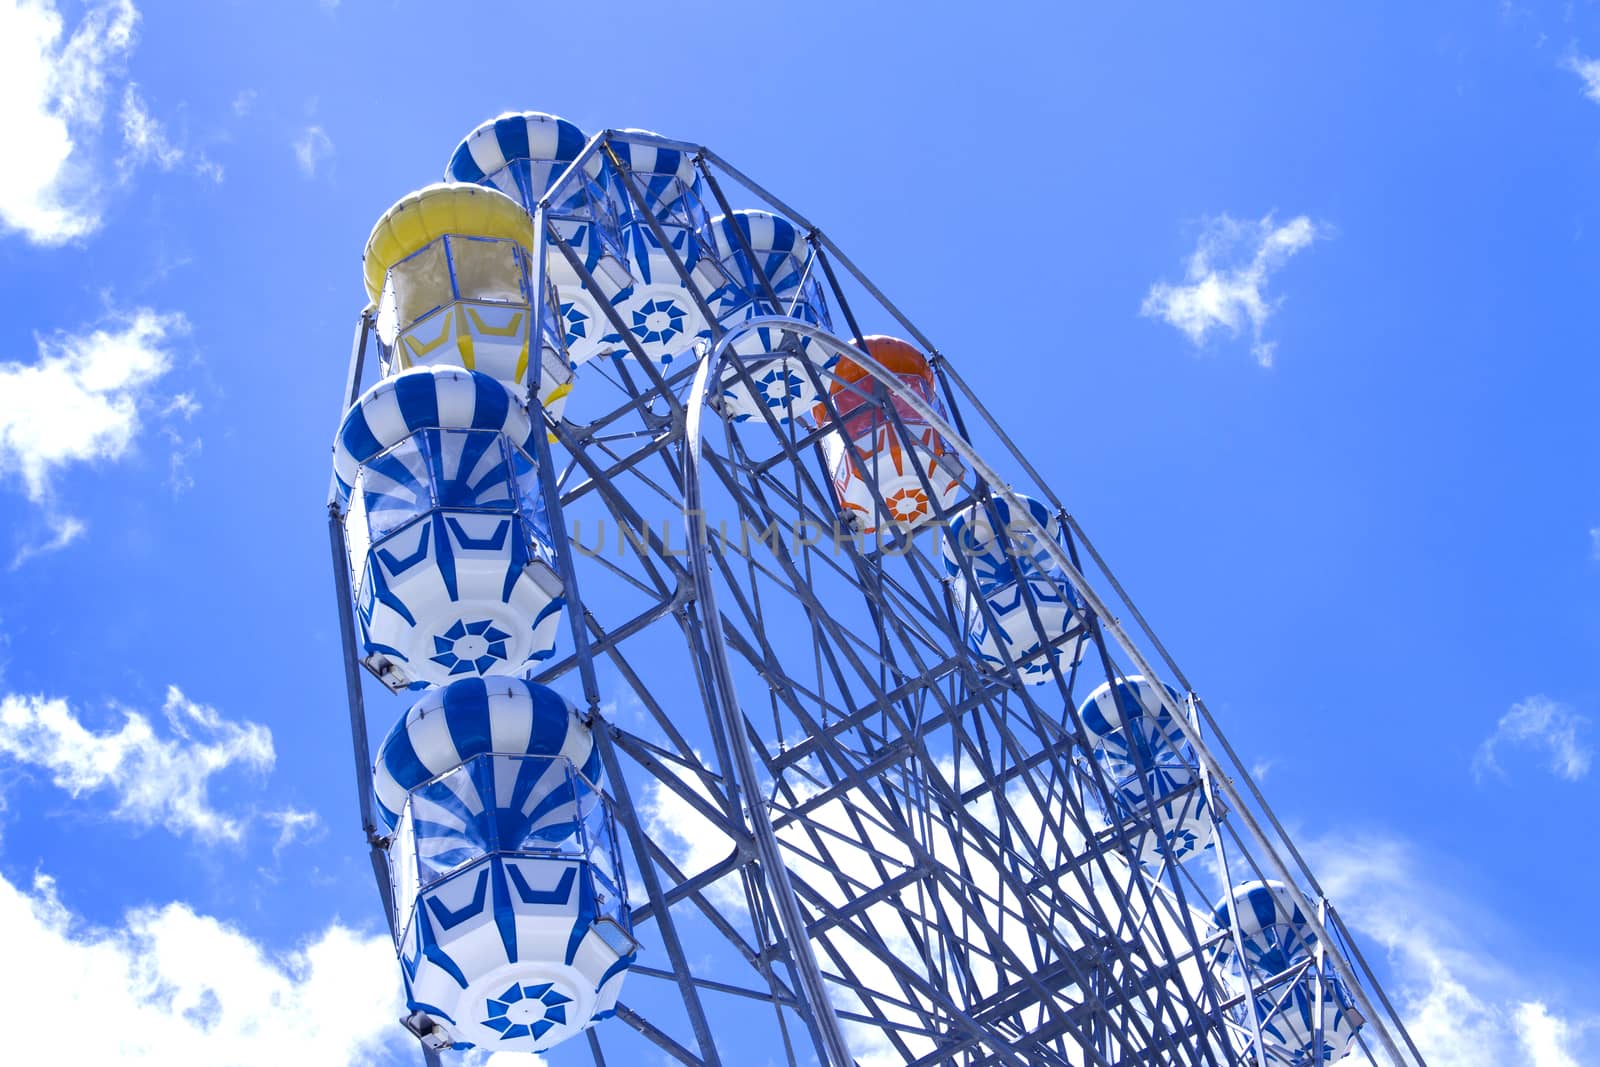 Giant ferris wheel against blue sky and white cloud